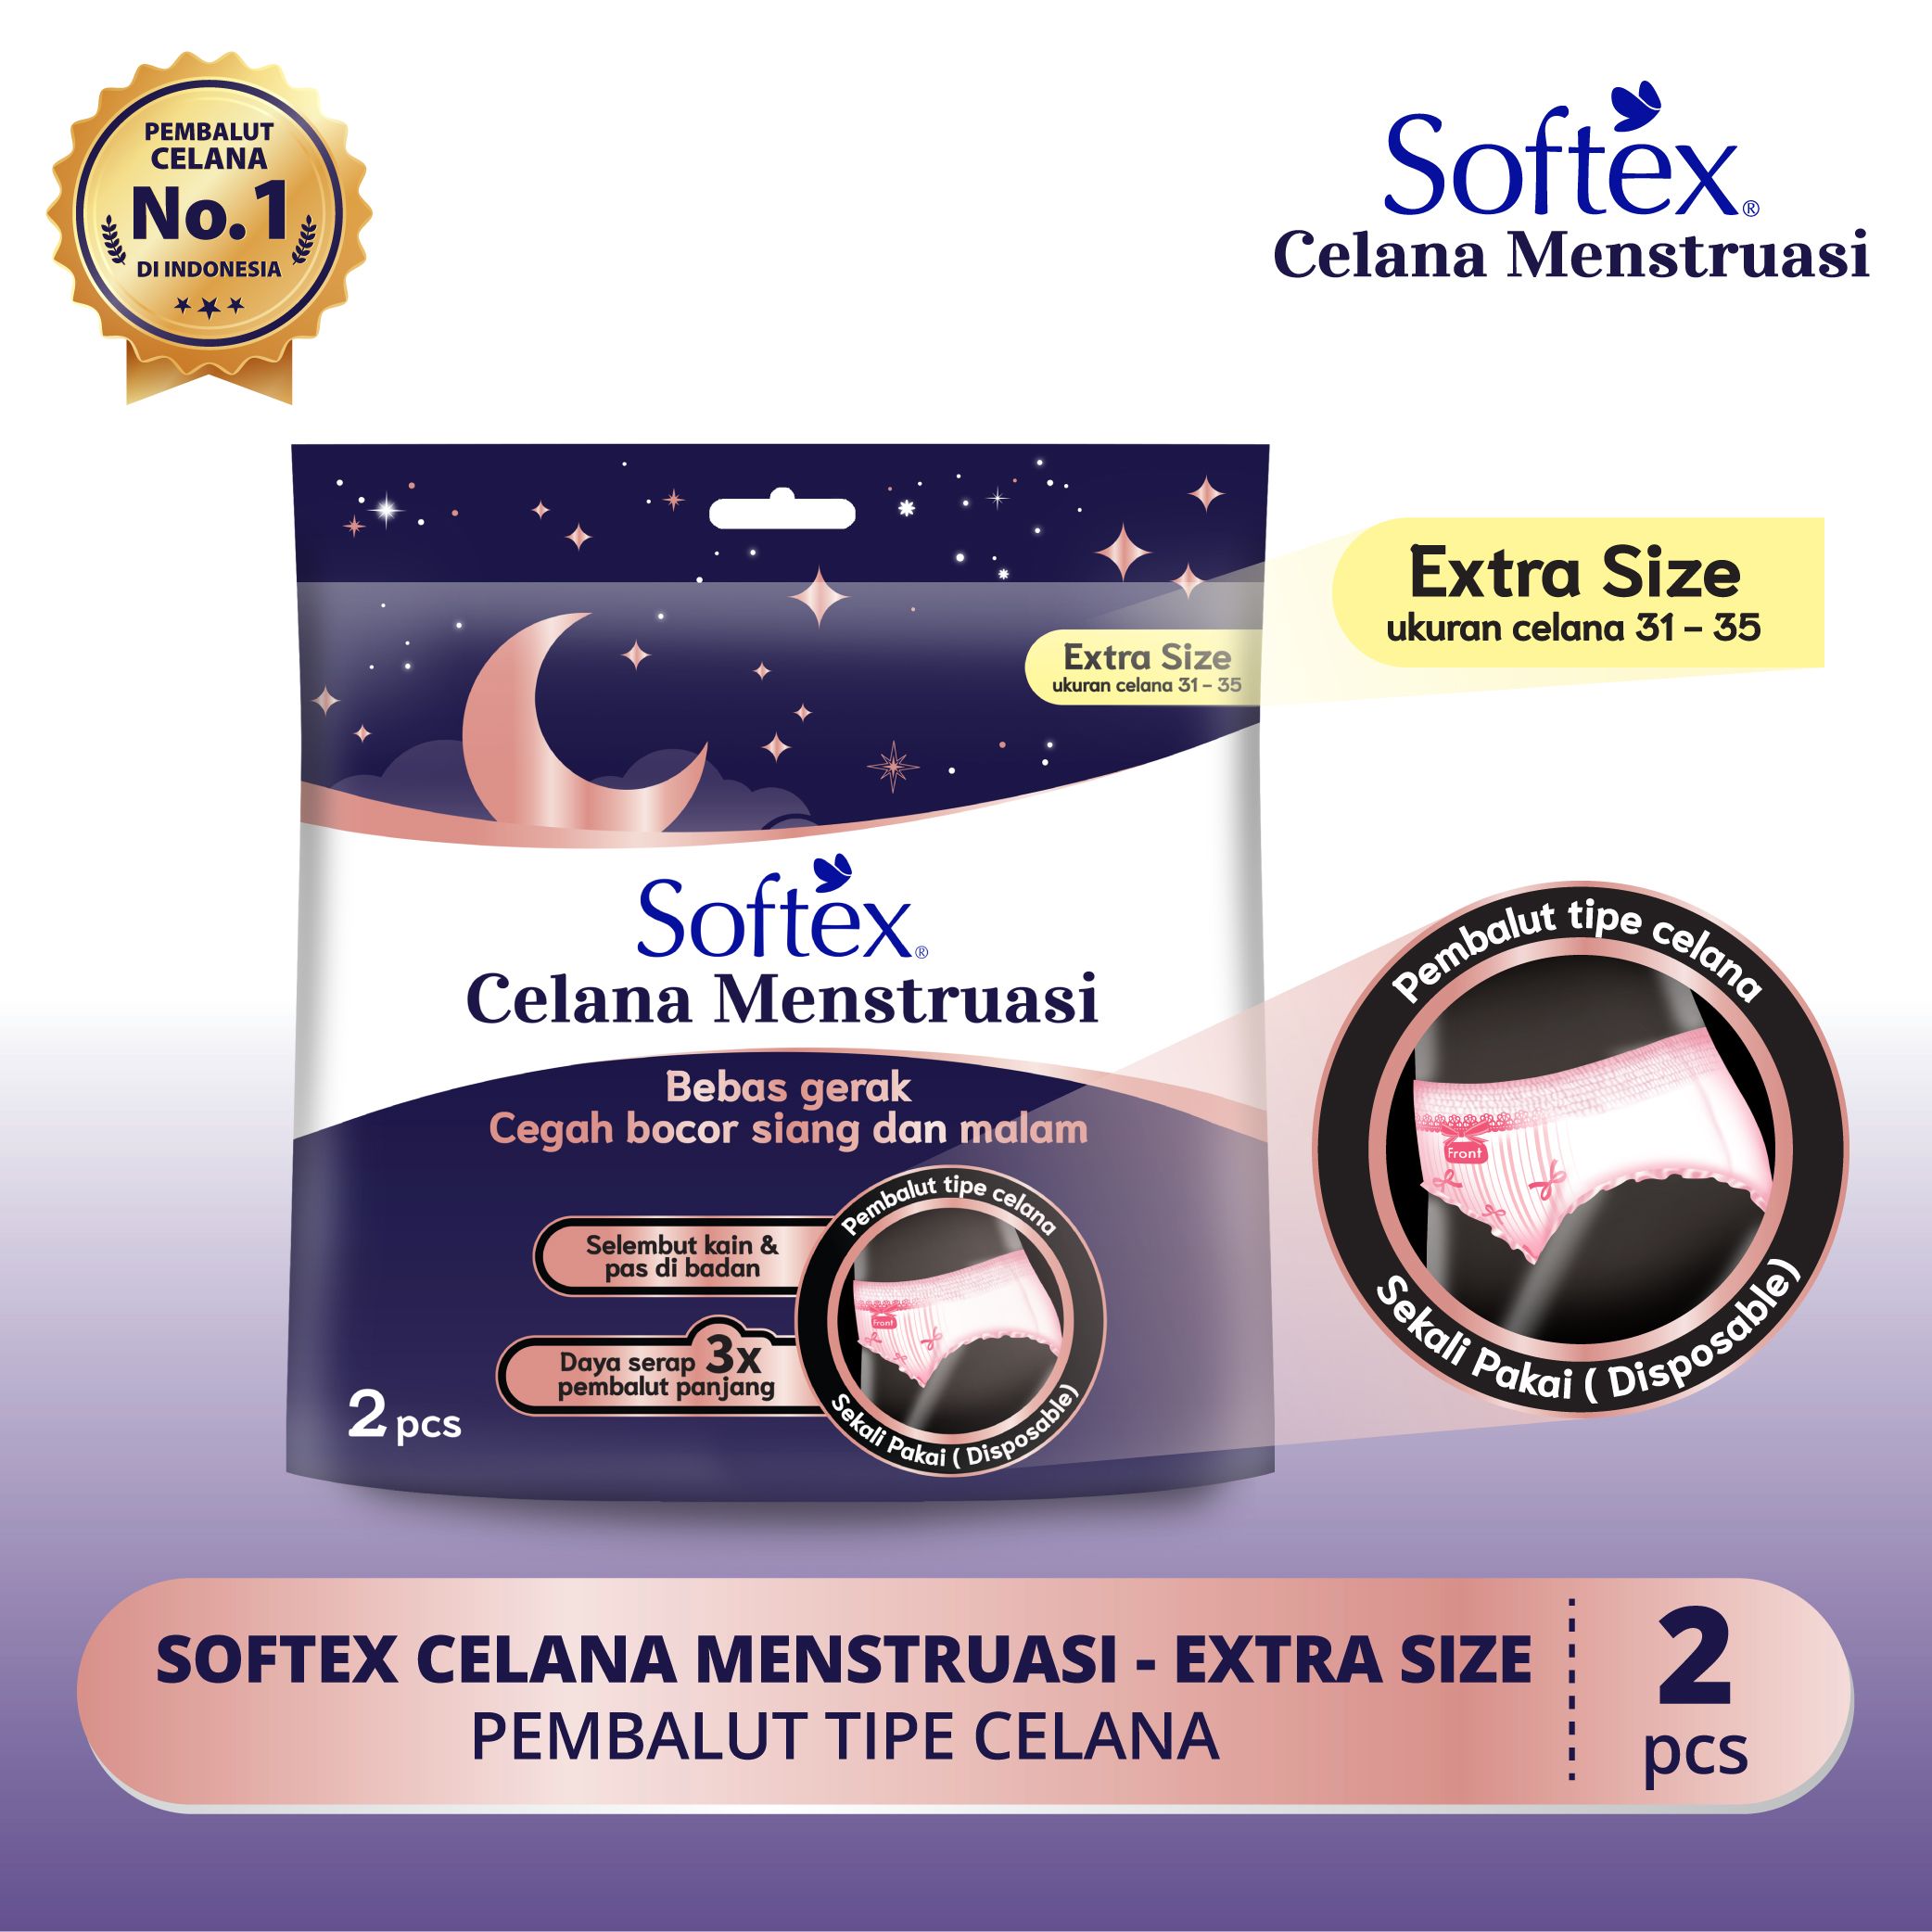 Softex Celana Menstruasi EXTRA SIZE - Pembalut Wanita - 1